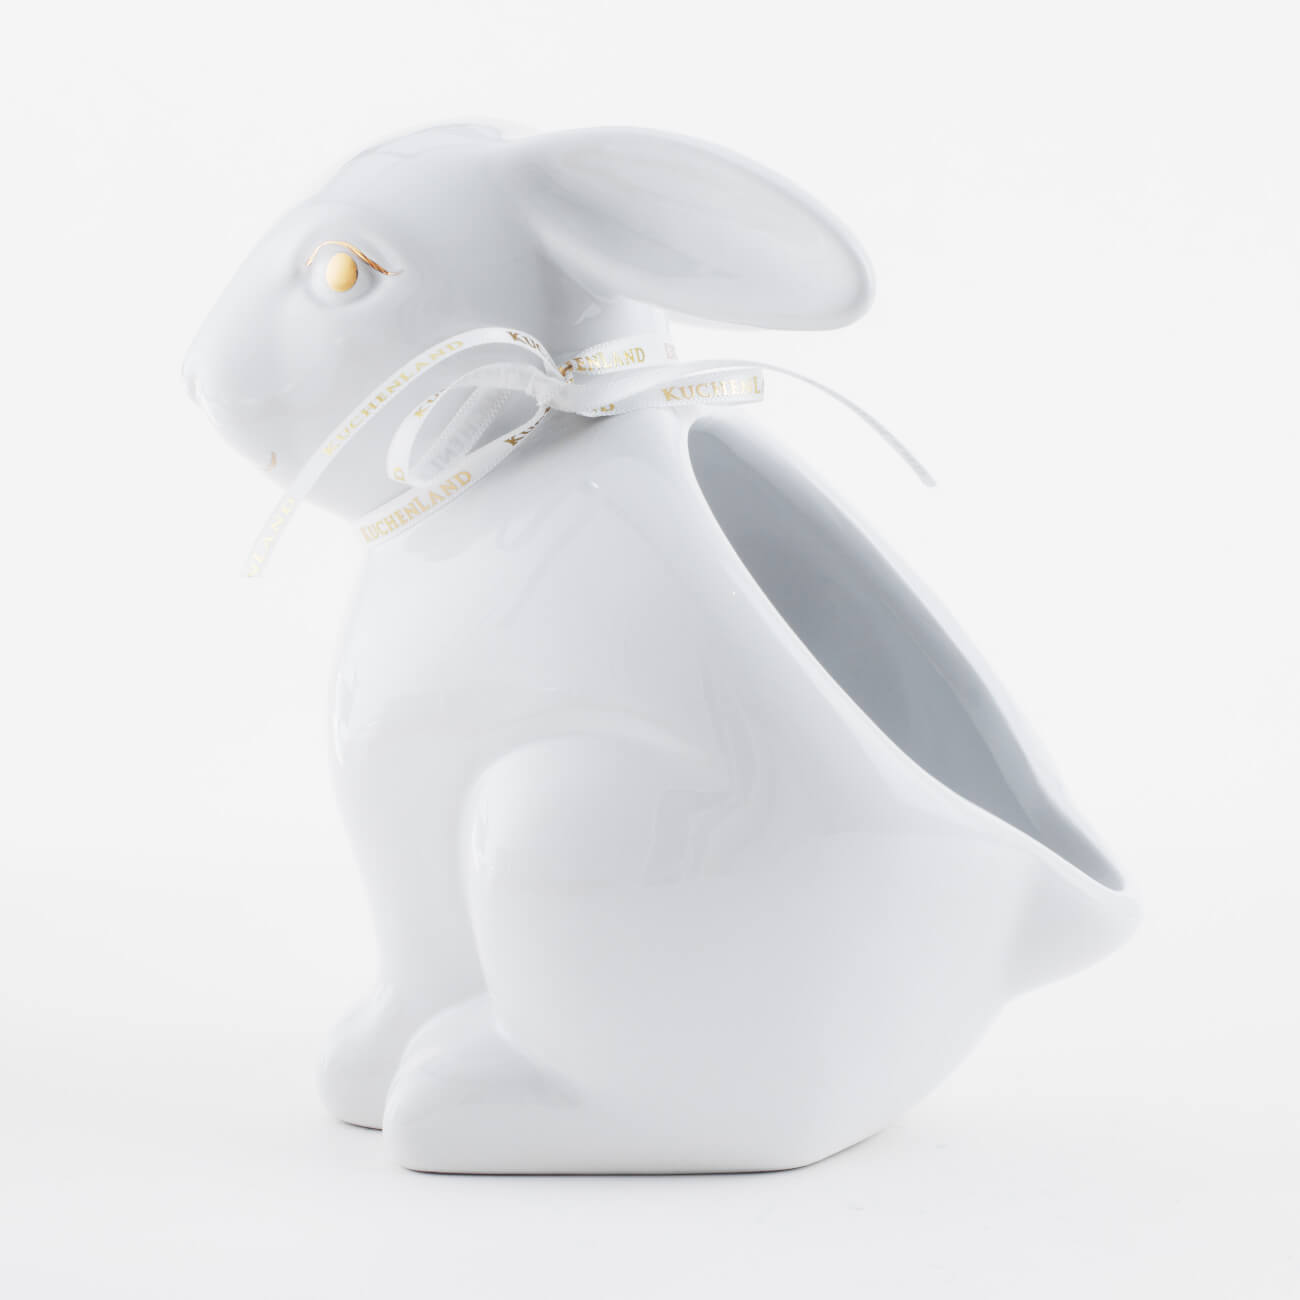 Конфетница, 17х17 см, керамика, белая, Кролик, Easter gold кувшин 1 3 л керамика молочный кролик easter gold